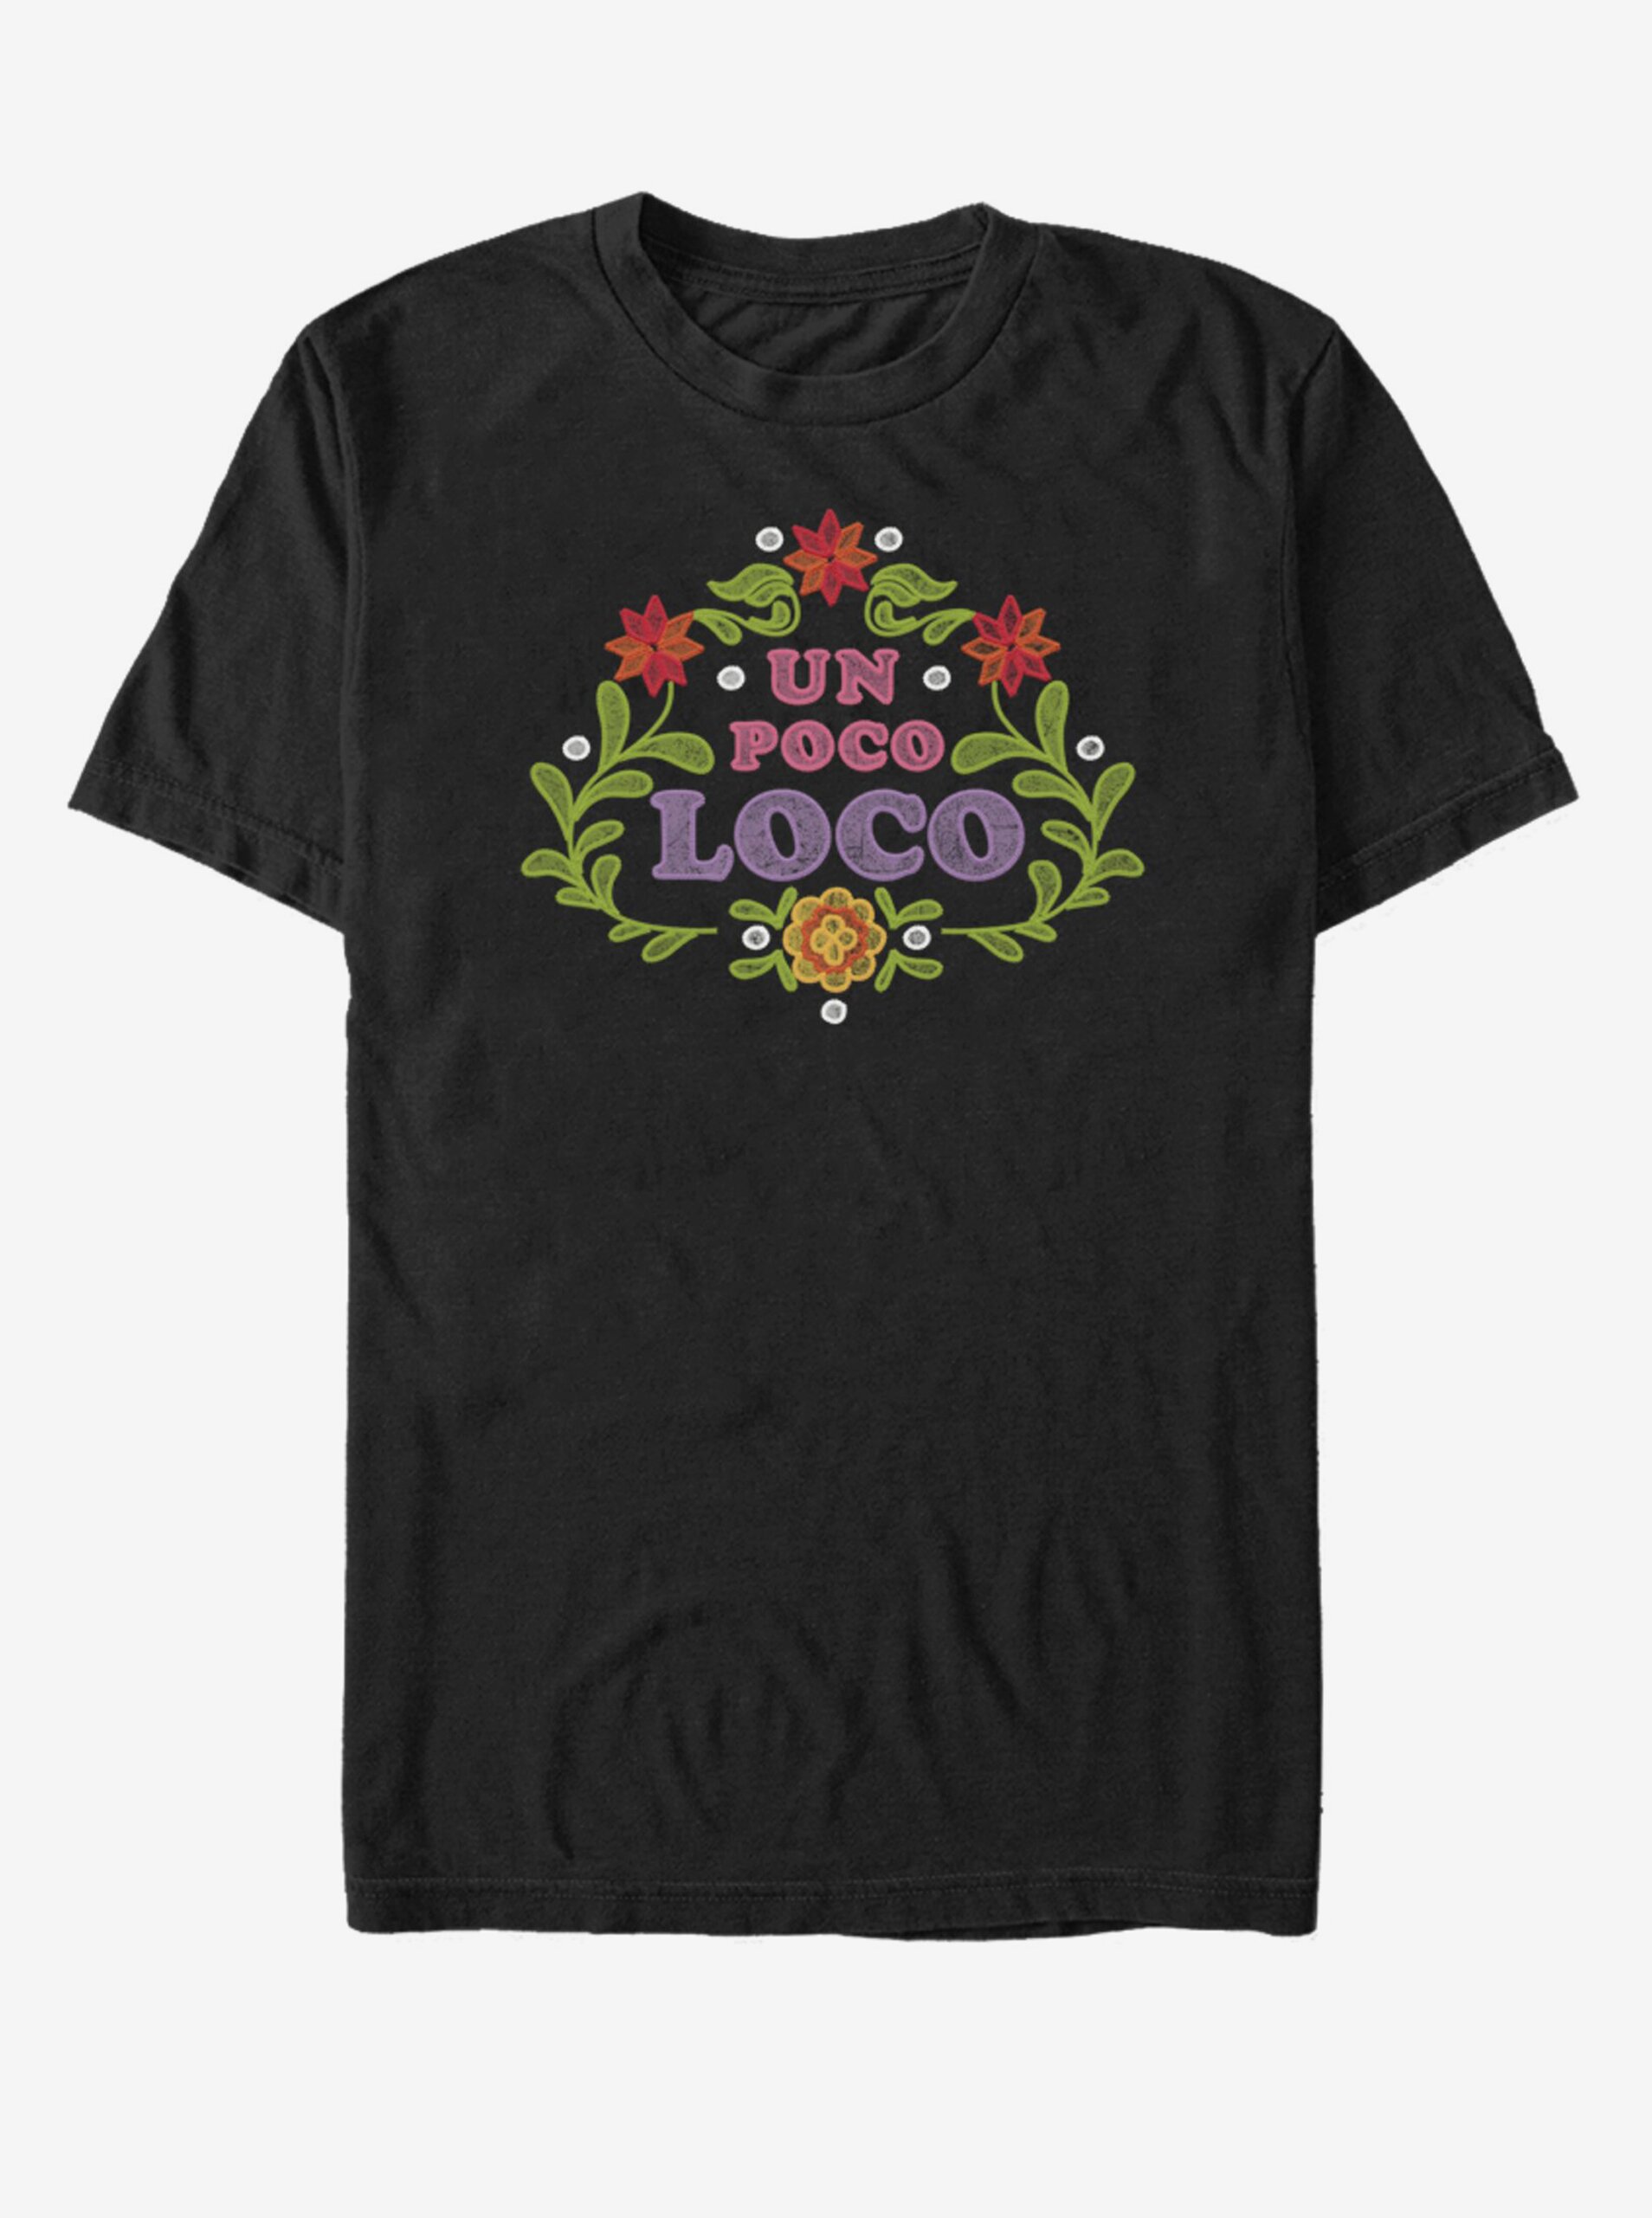 Lacno Čierne unisex tričko s potlačou ZOOT.Fun Un Poco Loco Floral Emb Pixar